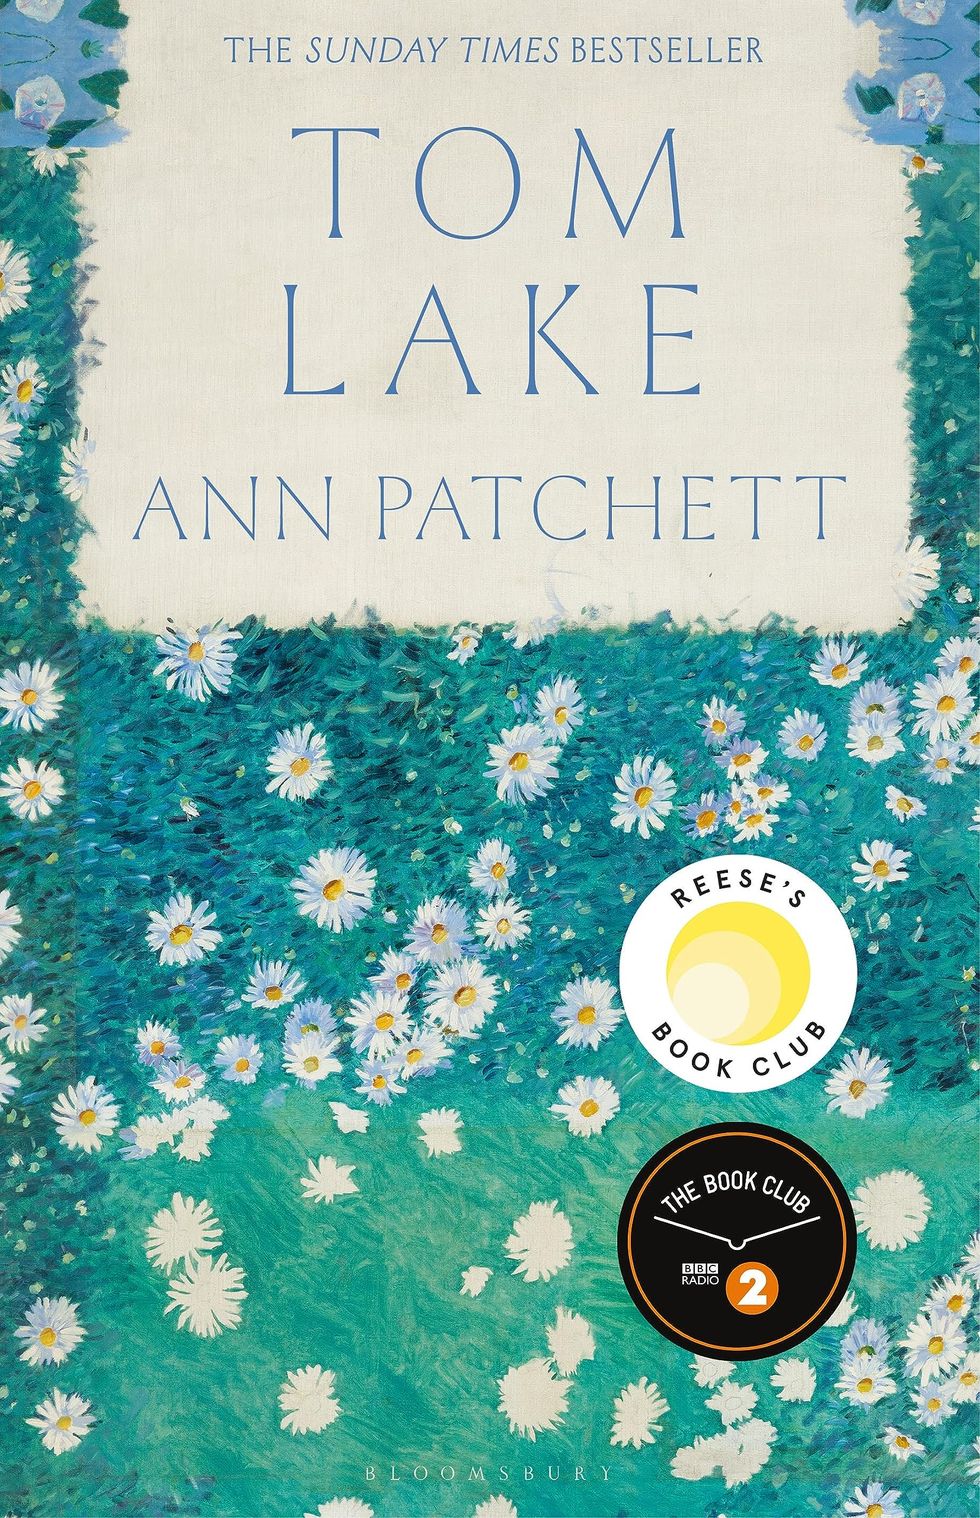 Tom Lake by Ann Patchett (Bloomsbury)